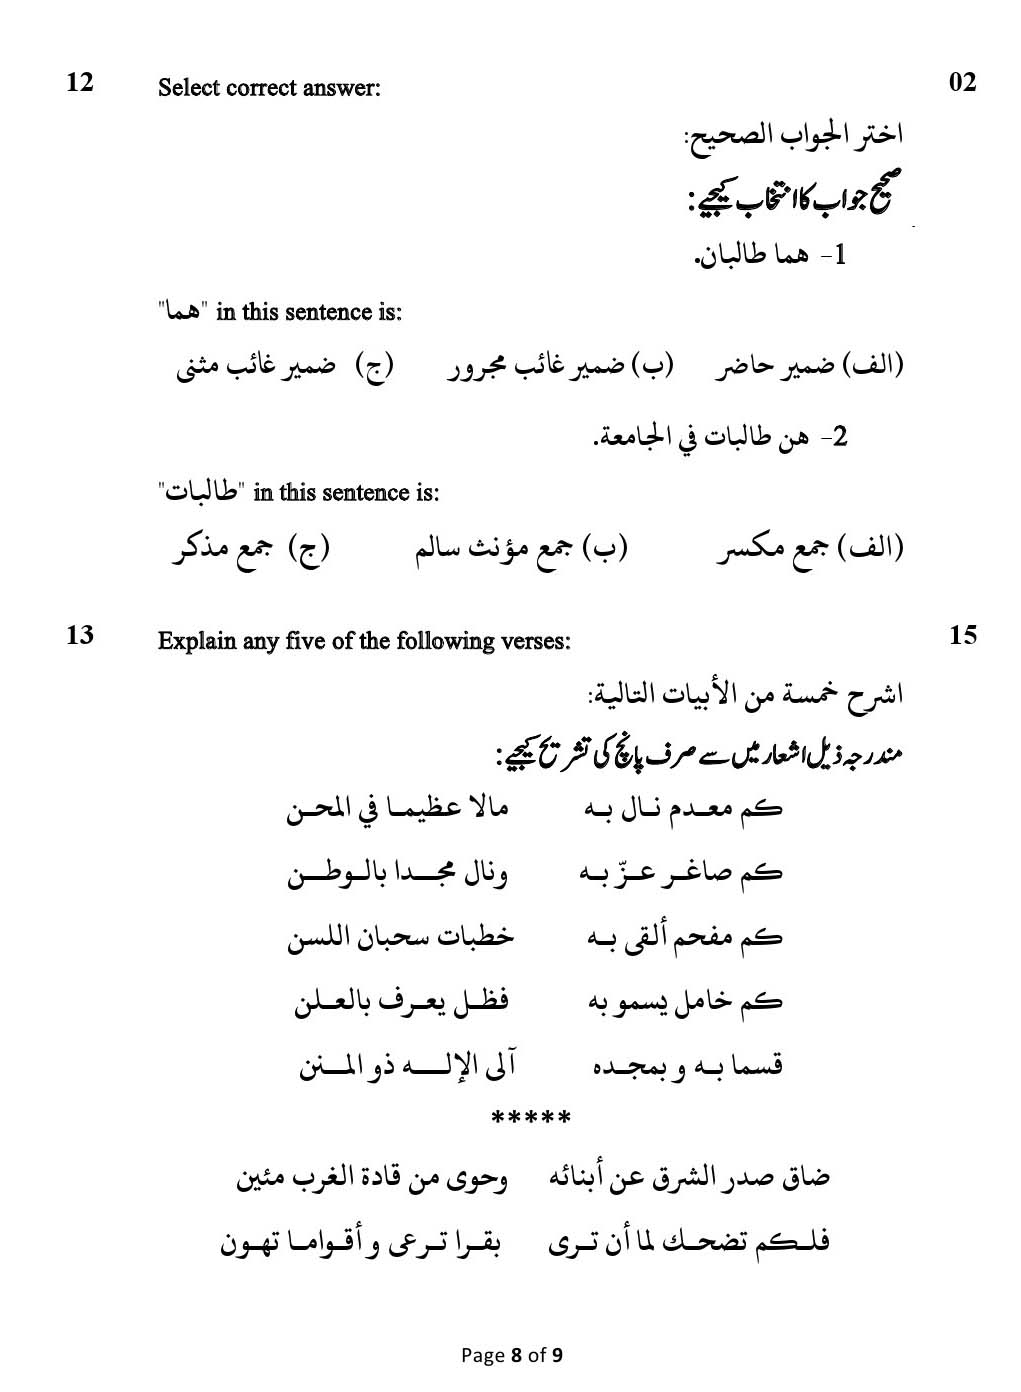 Arabic CBSE Class X Sample Question Paper 2018-19 - Image 8